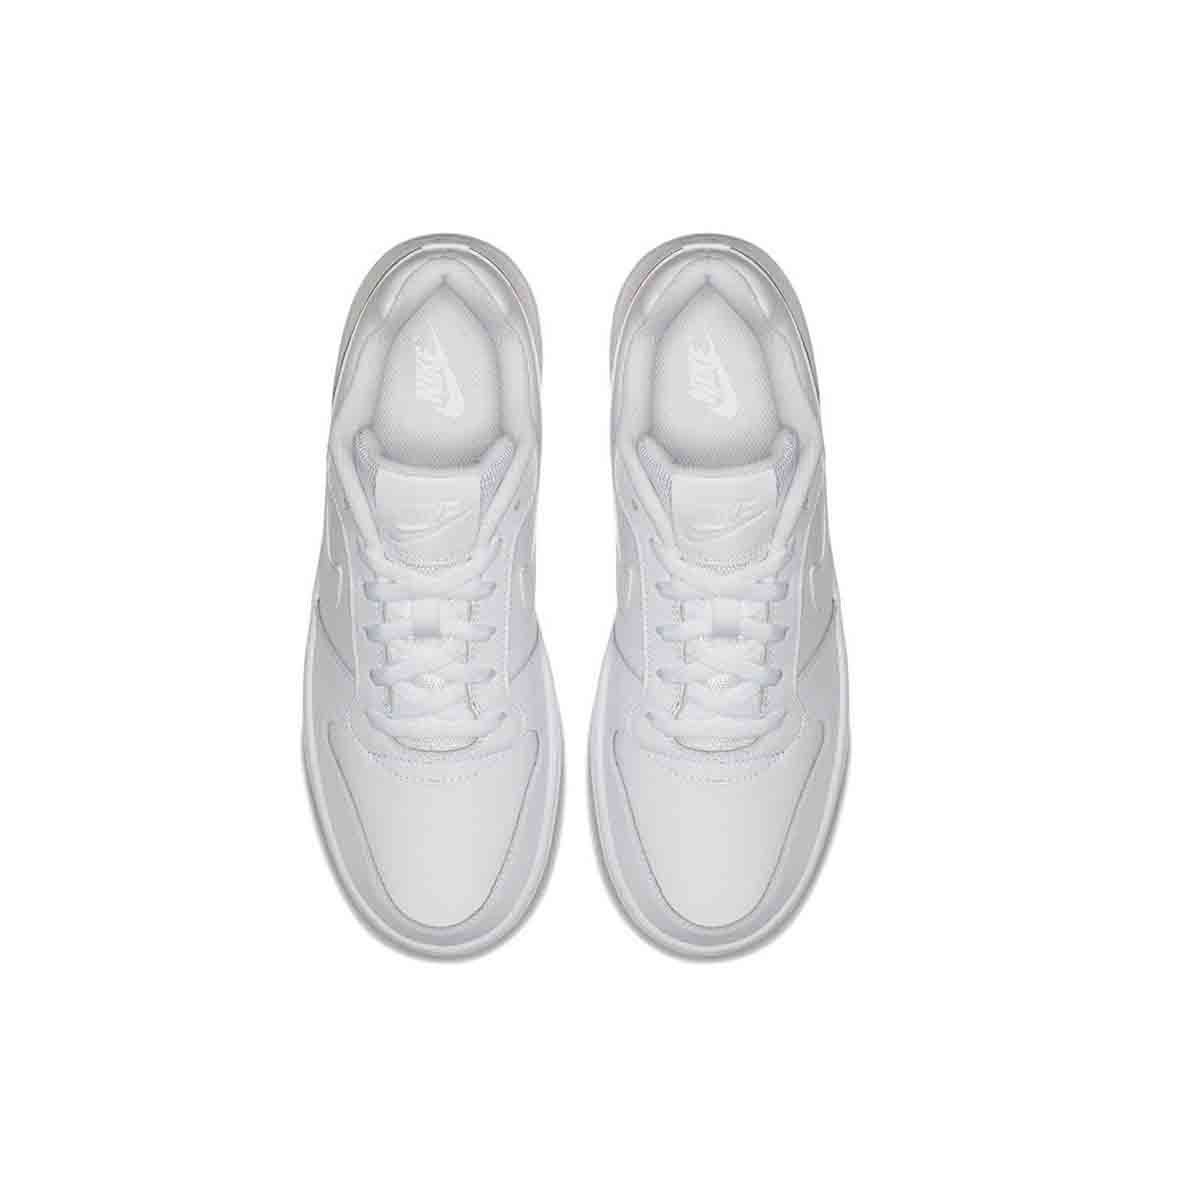 Sneakers Nike Ebernon Low Premium (AQ1774-100) AQ1774-100 £25.69 Sneaker  Peeker - The Best Discounts! - Footwear, Apparel & Accessoriess | Street,  Trekking, Sport, Lifestyle